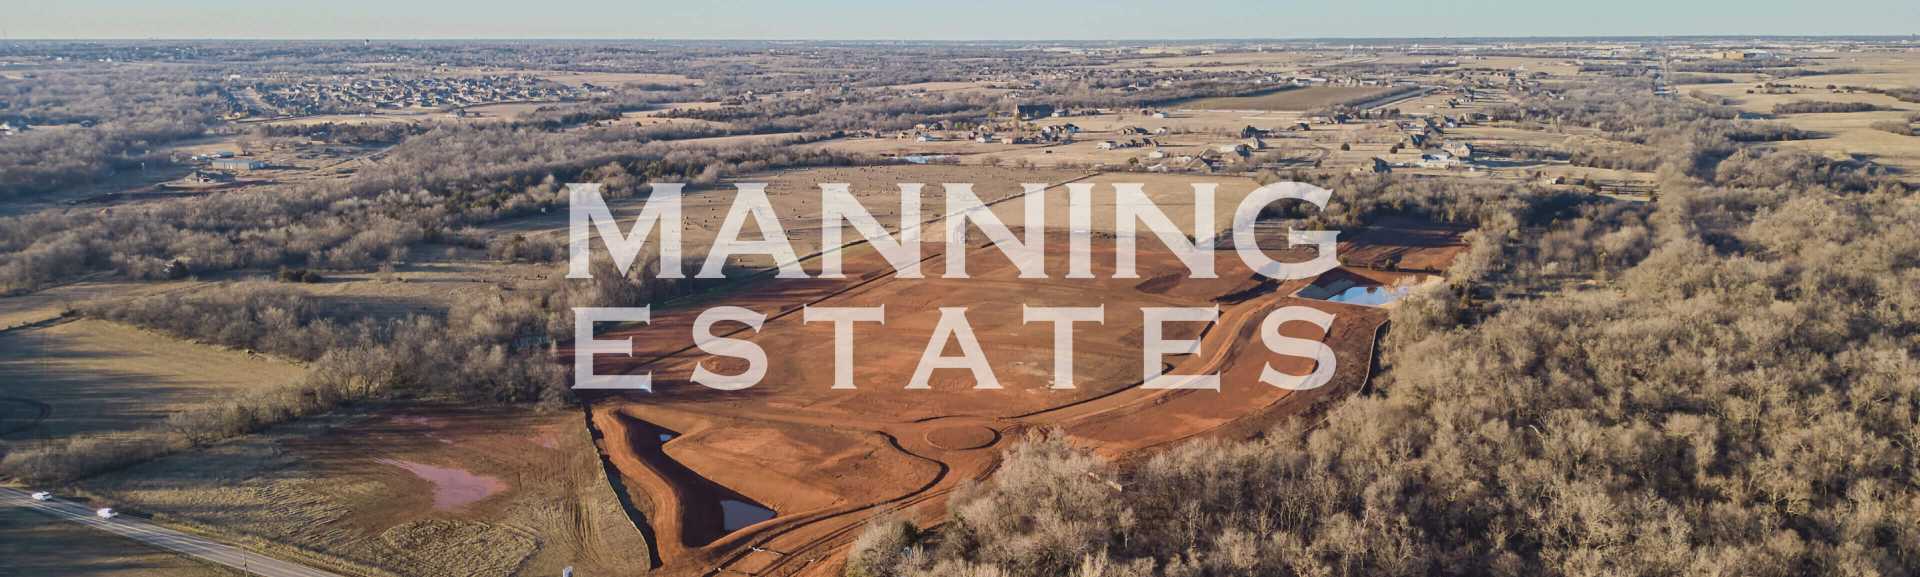 Manning Estates, Edmond, OK